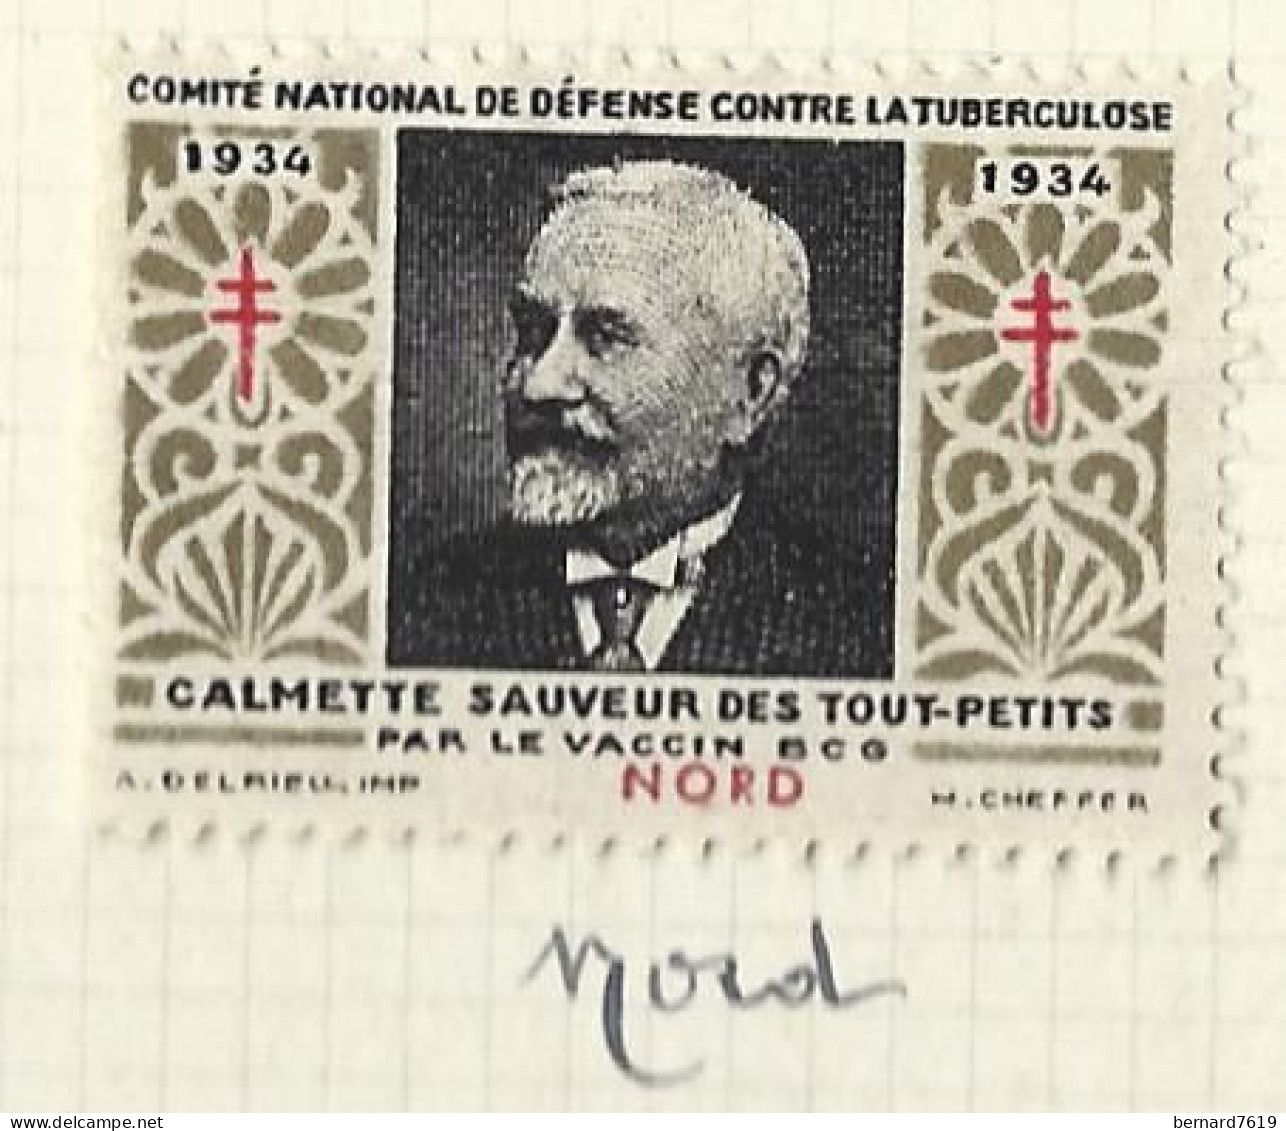 Timbre   France- - Croix Rouge - Erinnophilie -comIte National De Defense  La Tuberculose -1934- Calmette -59 Nord - Tegen Tuberculose